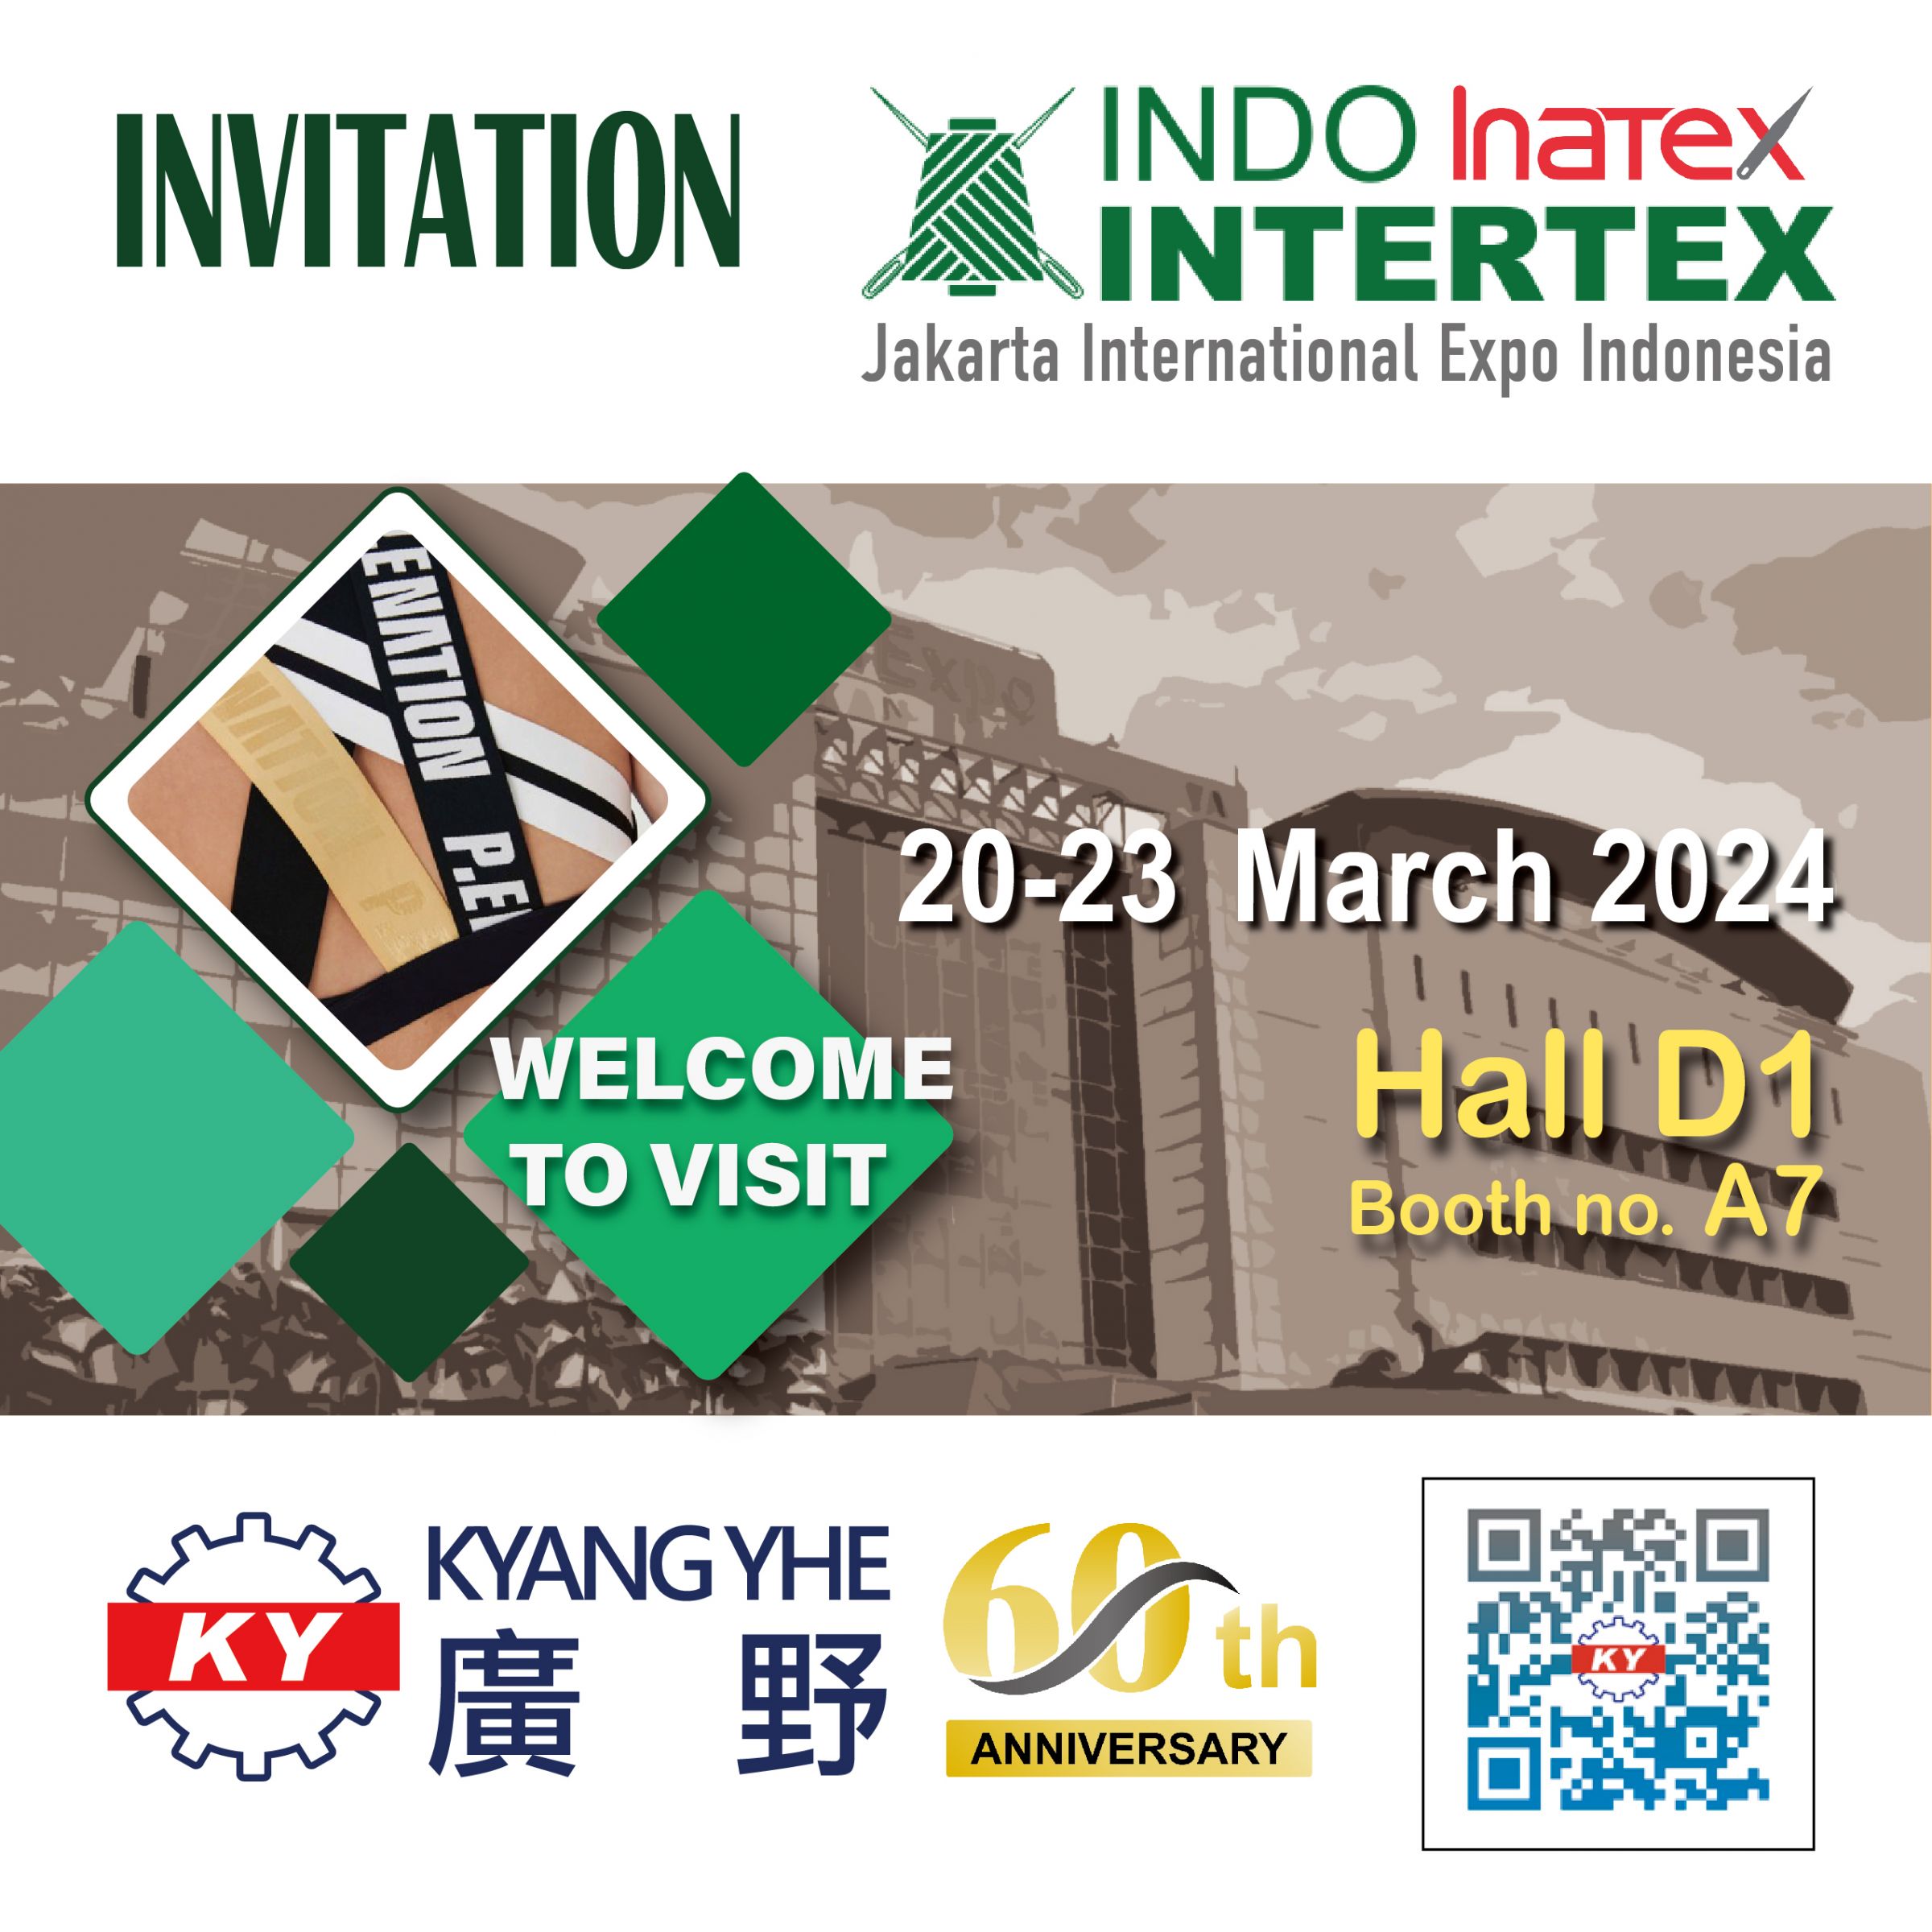 Kyang Yhe participará da INDONESIA INTERTEX 2024